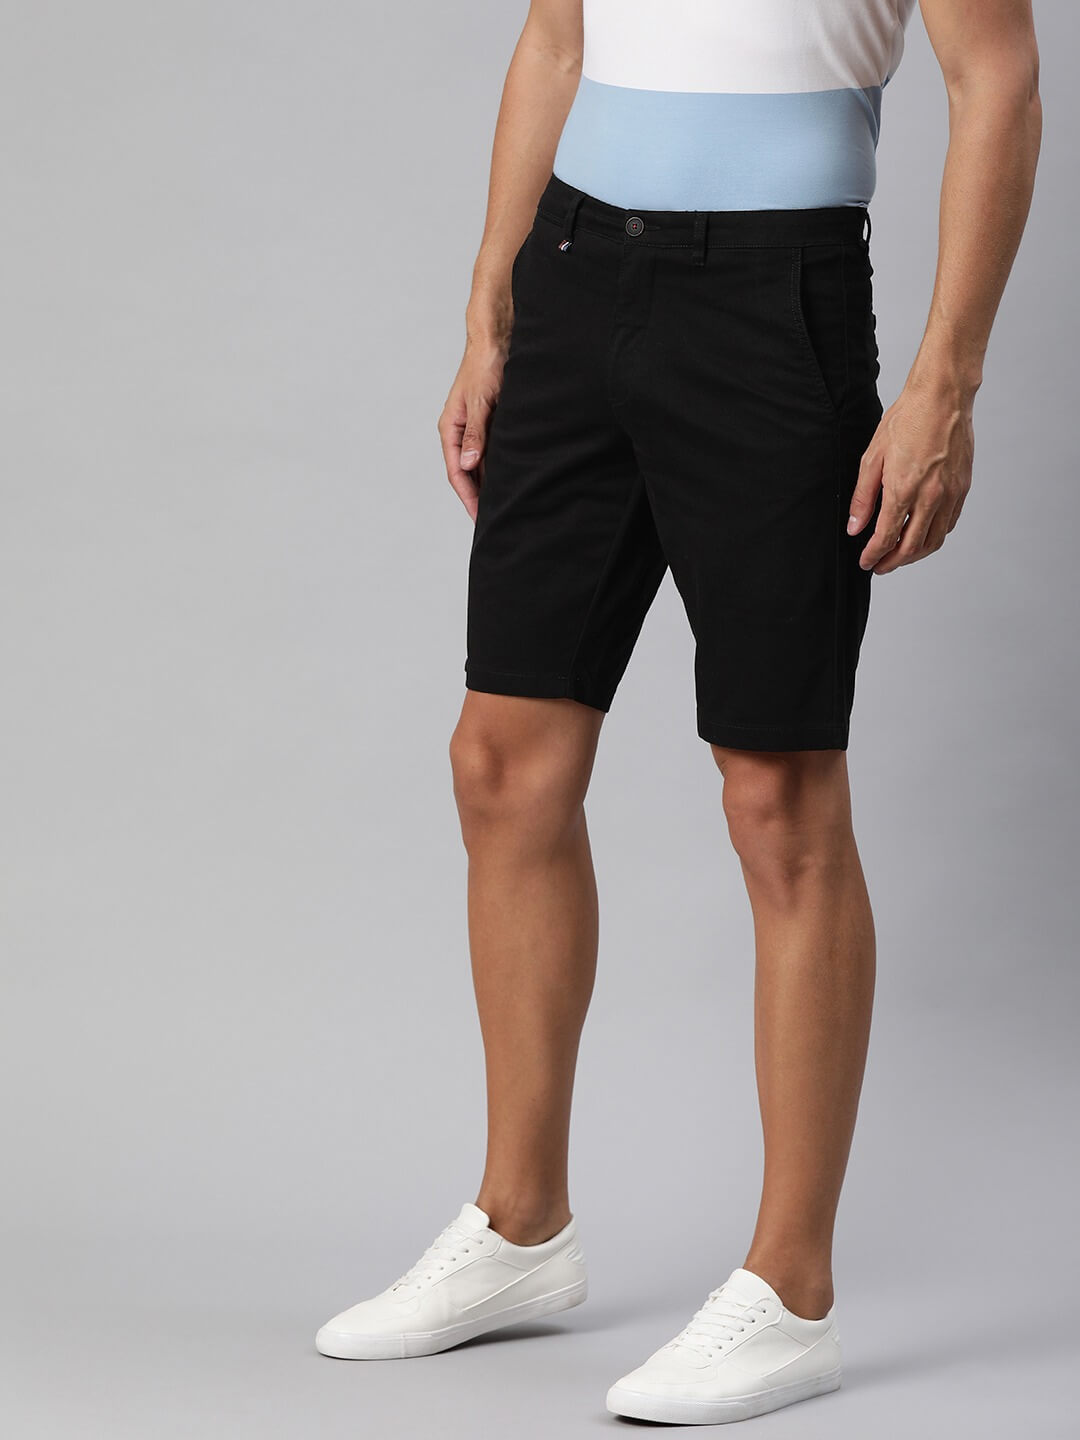 Men Black Solid Slim Fit Regular Shorts - Back View - AceCart